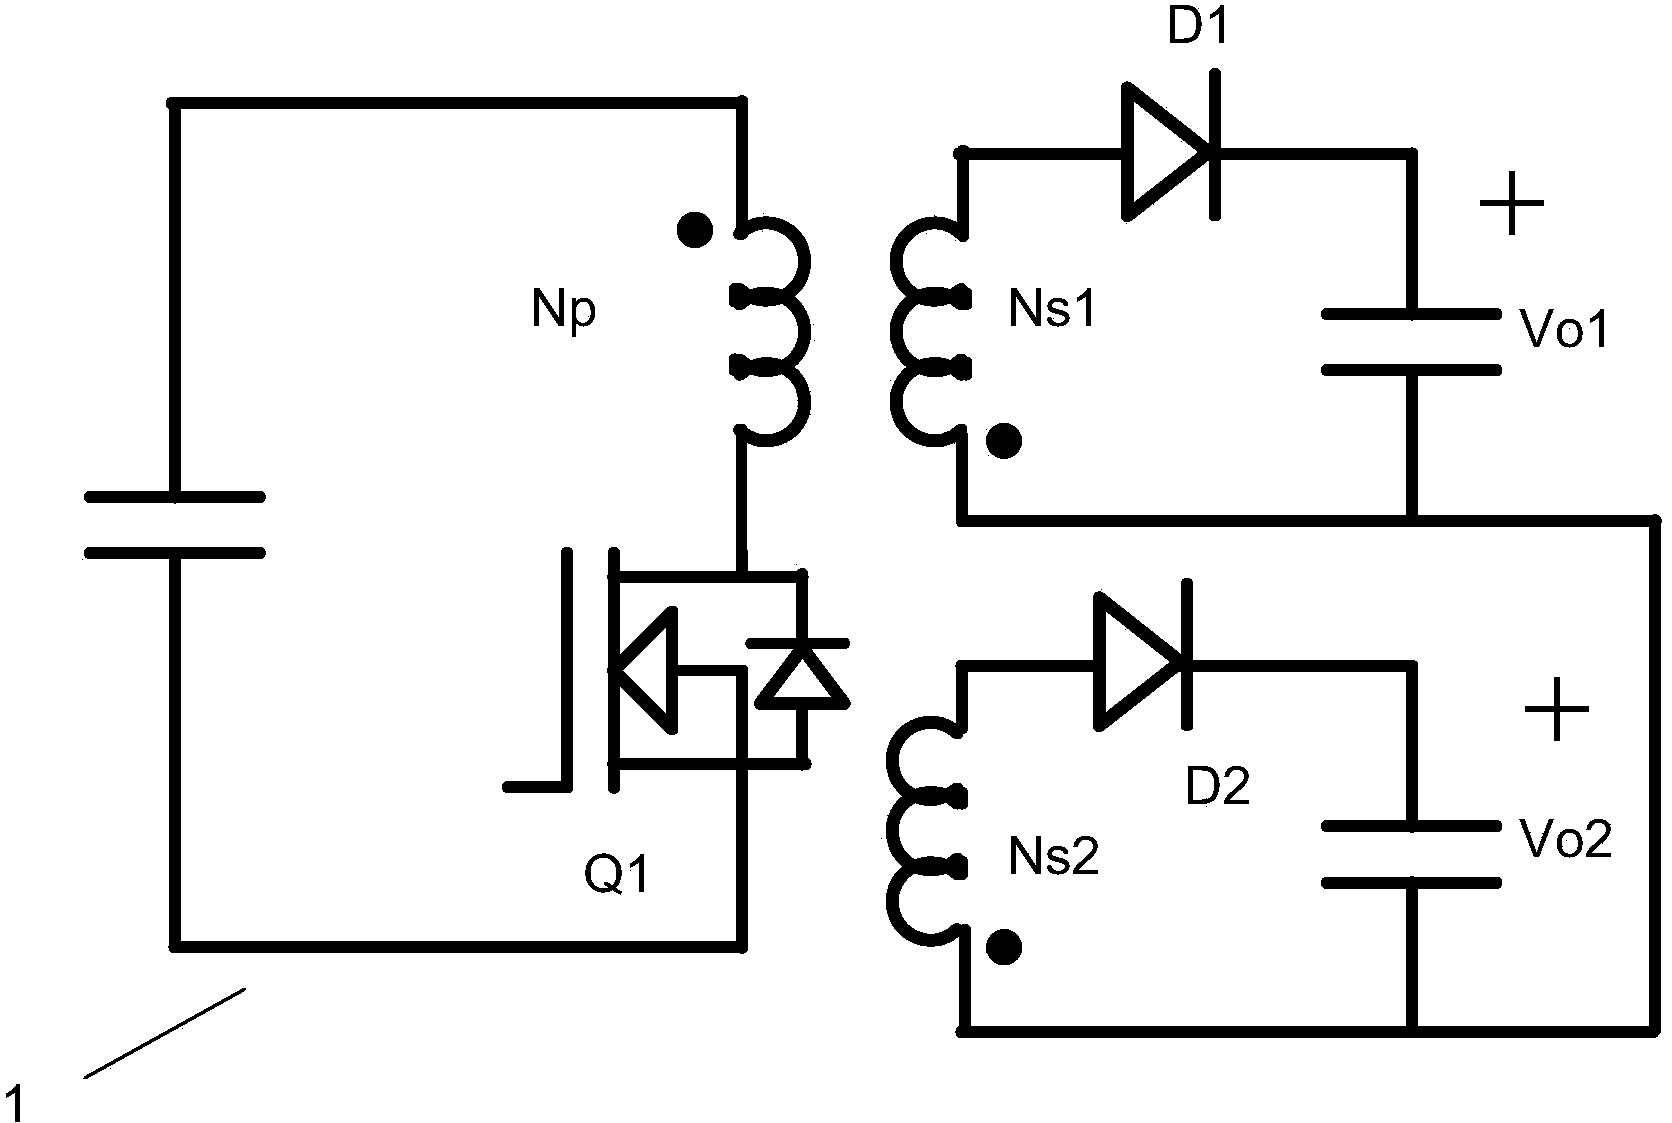 Power circuit